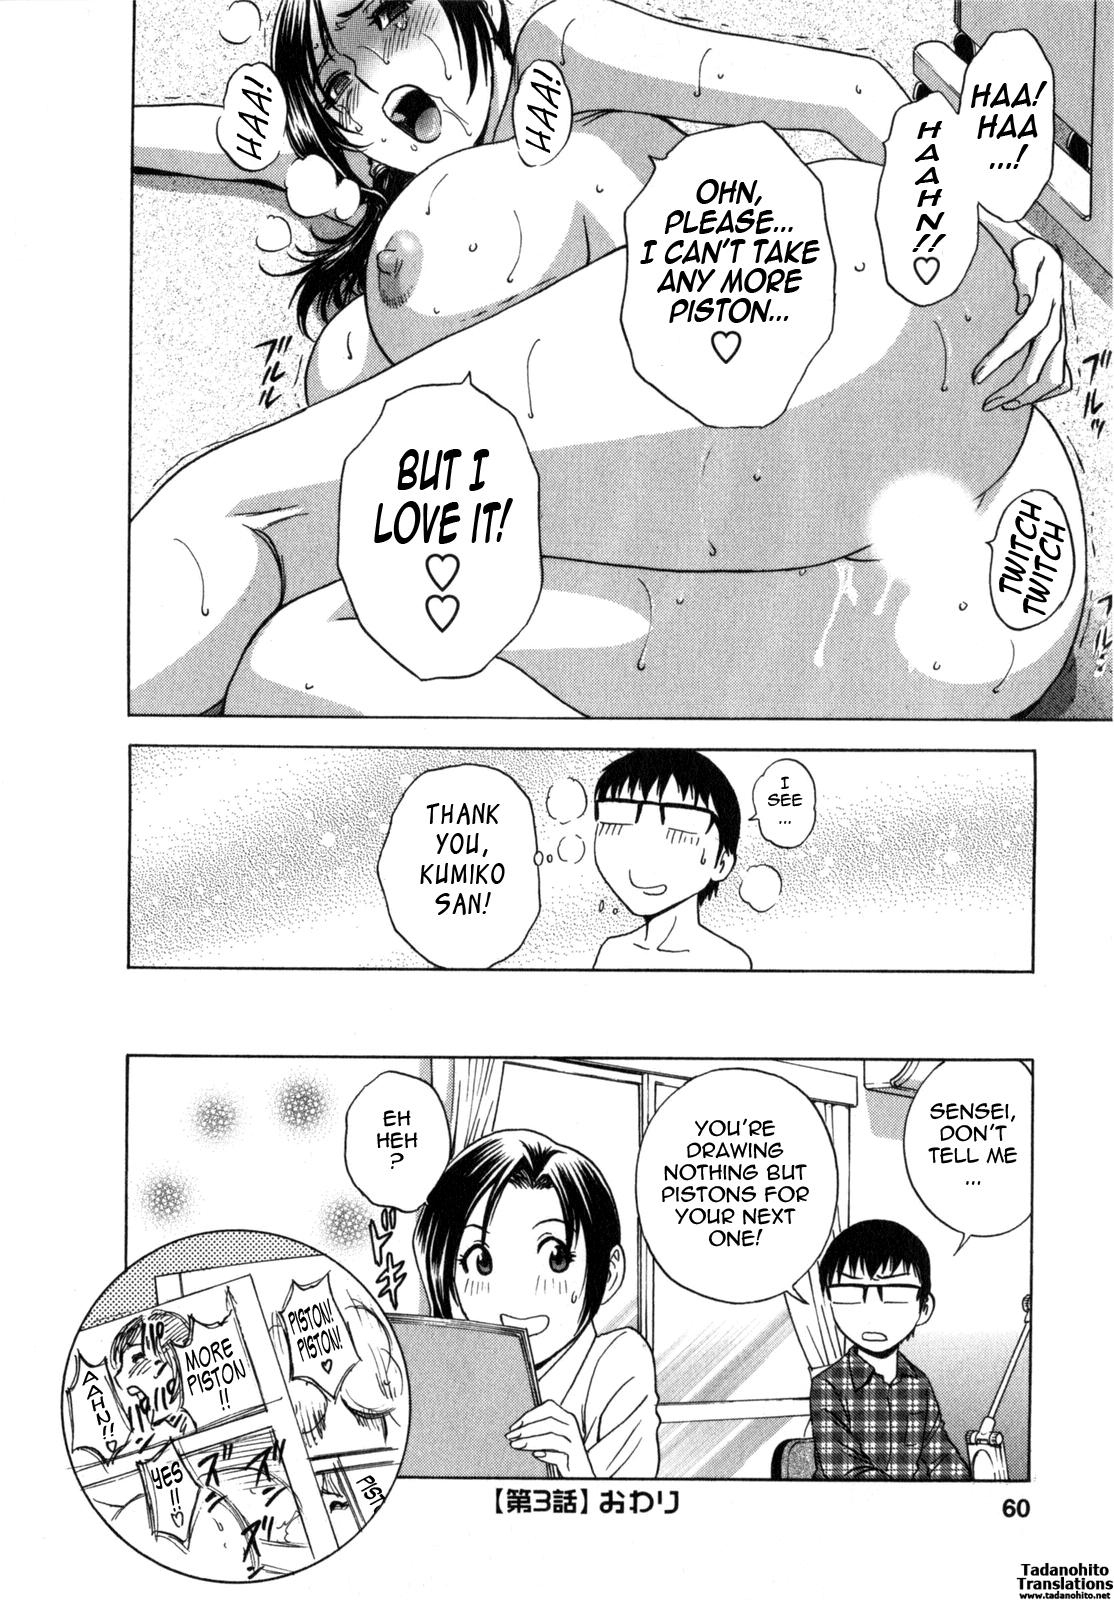 [Hidemaru] Life with Married Women Just Like a Manga 1 - Ch. 1-3 [English] {Tadanohito} 62